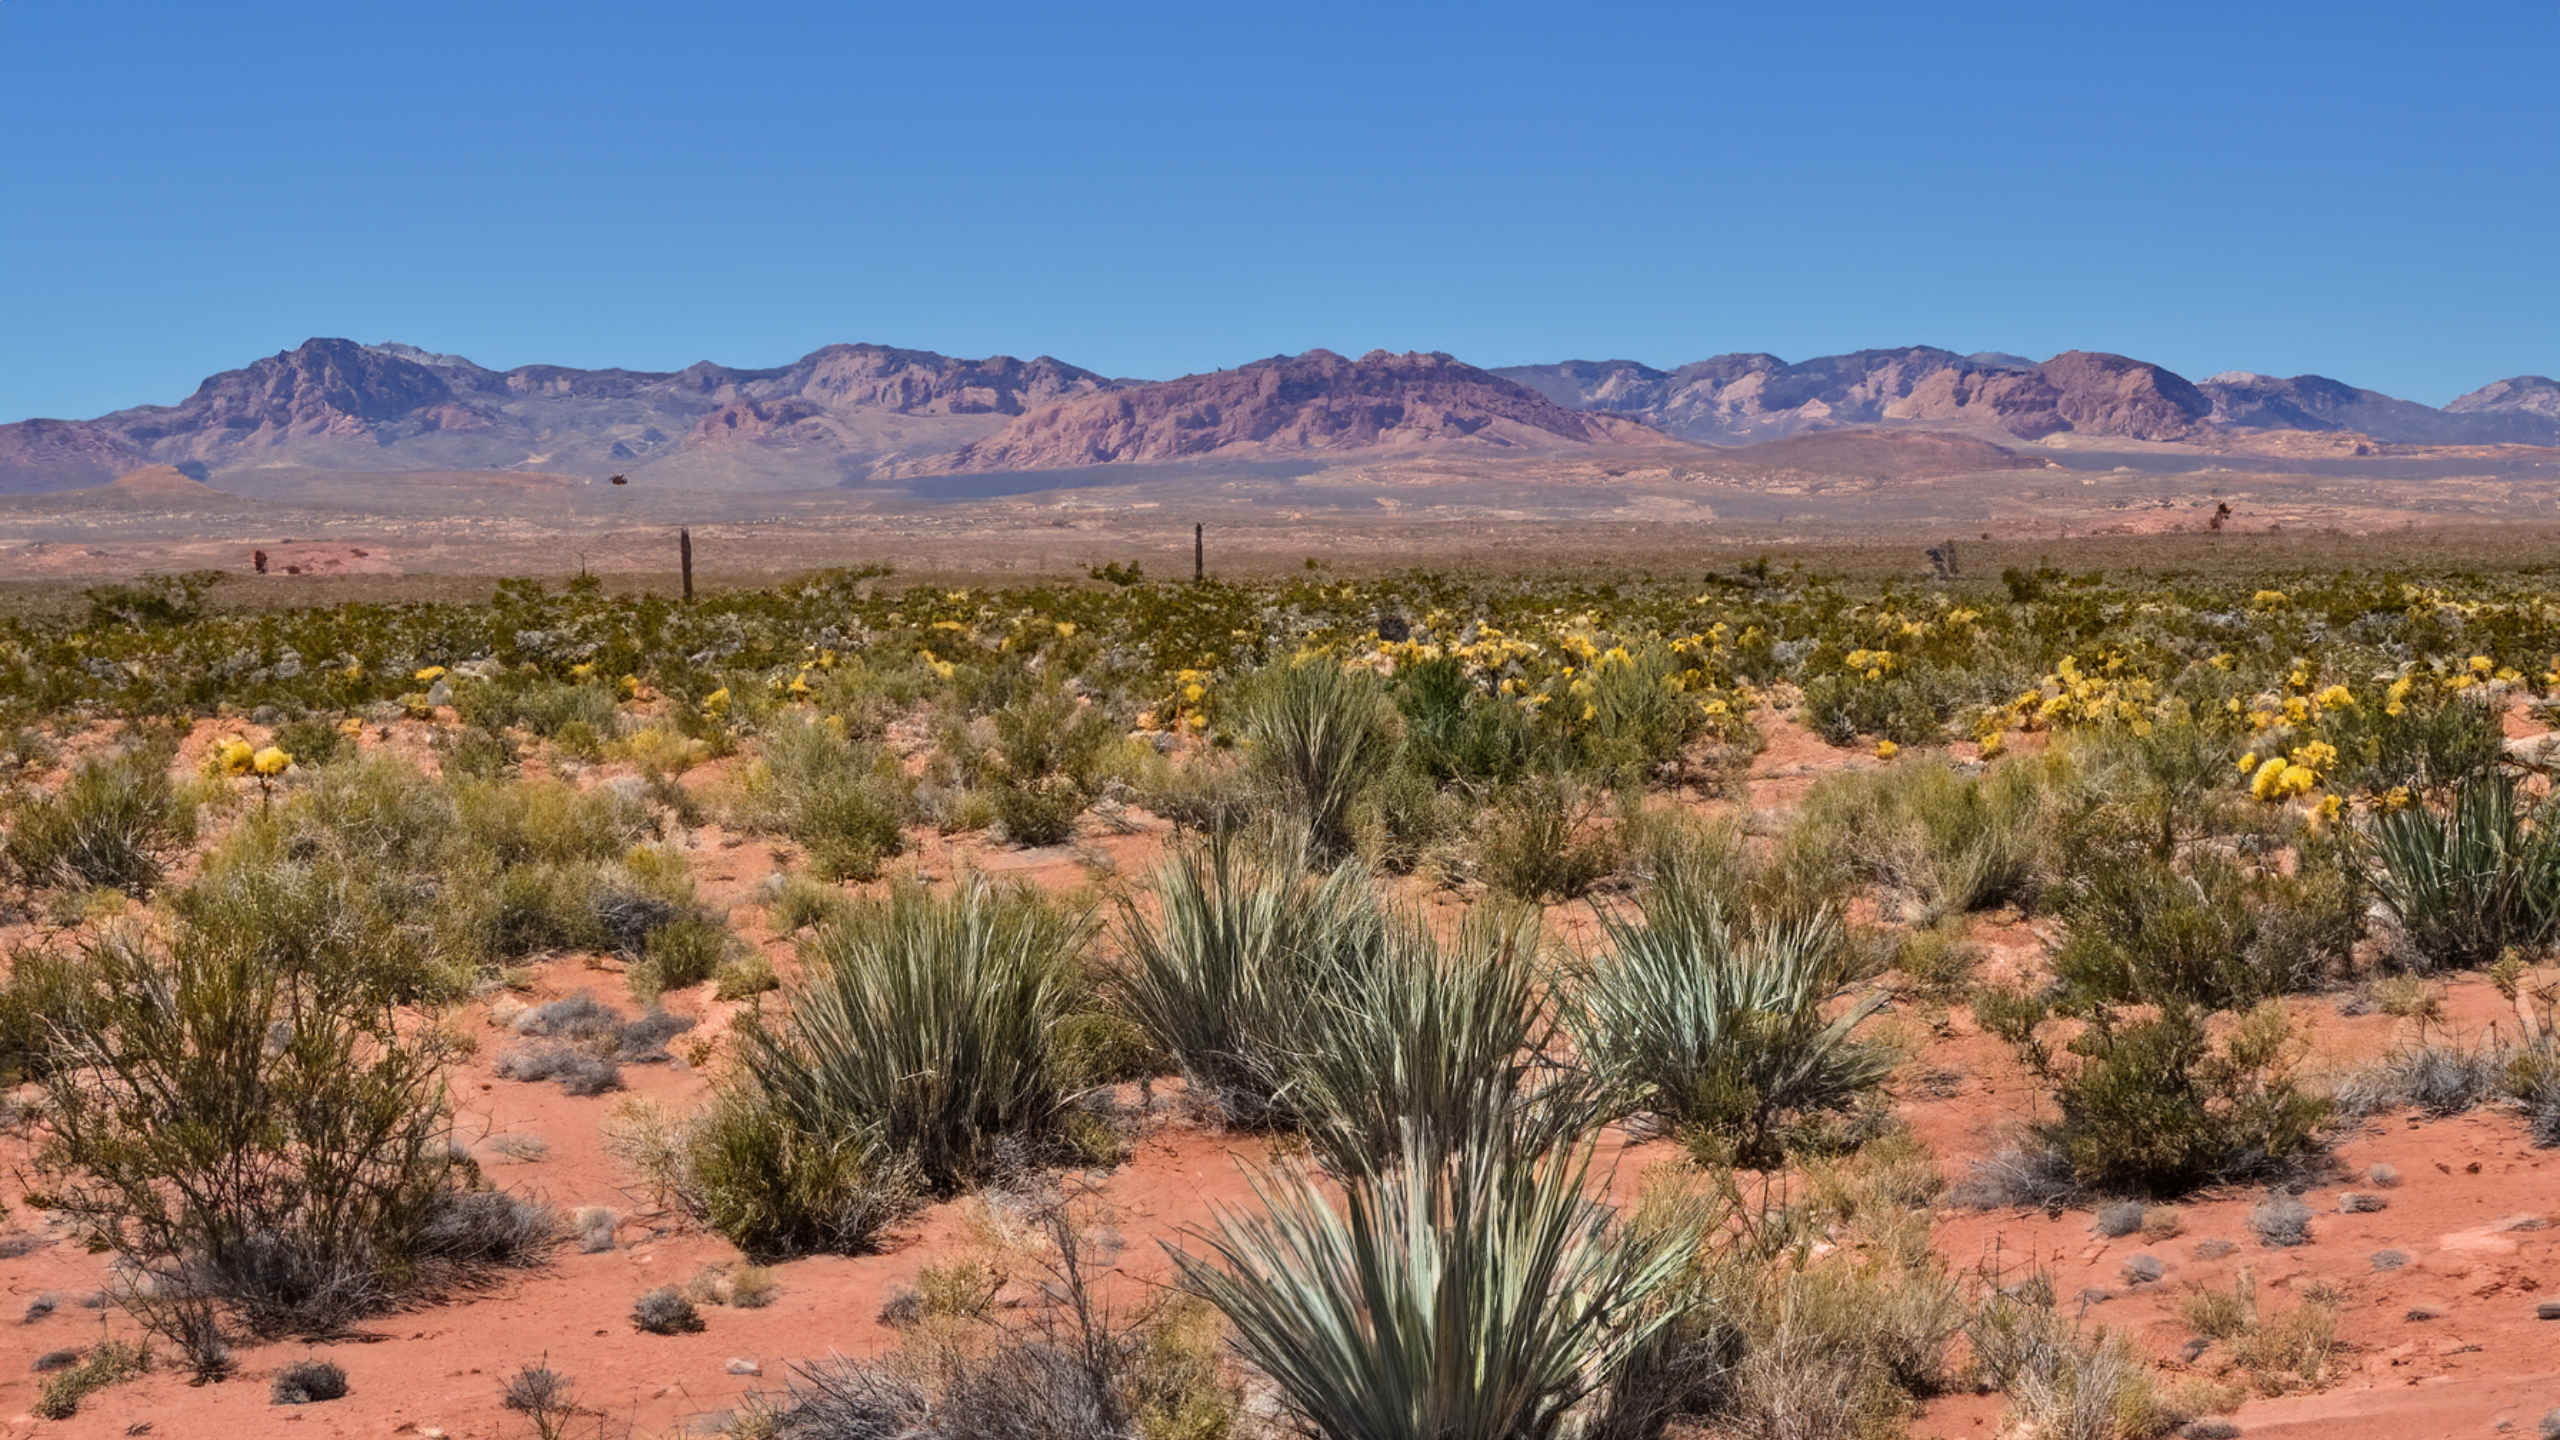 General 2560x1440 Mesquite nature Nevada area 51  Piñon Pine landscape